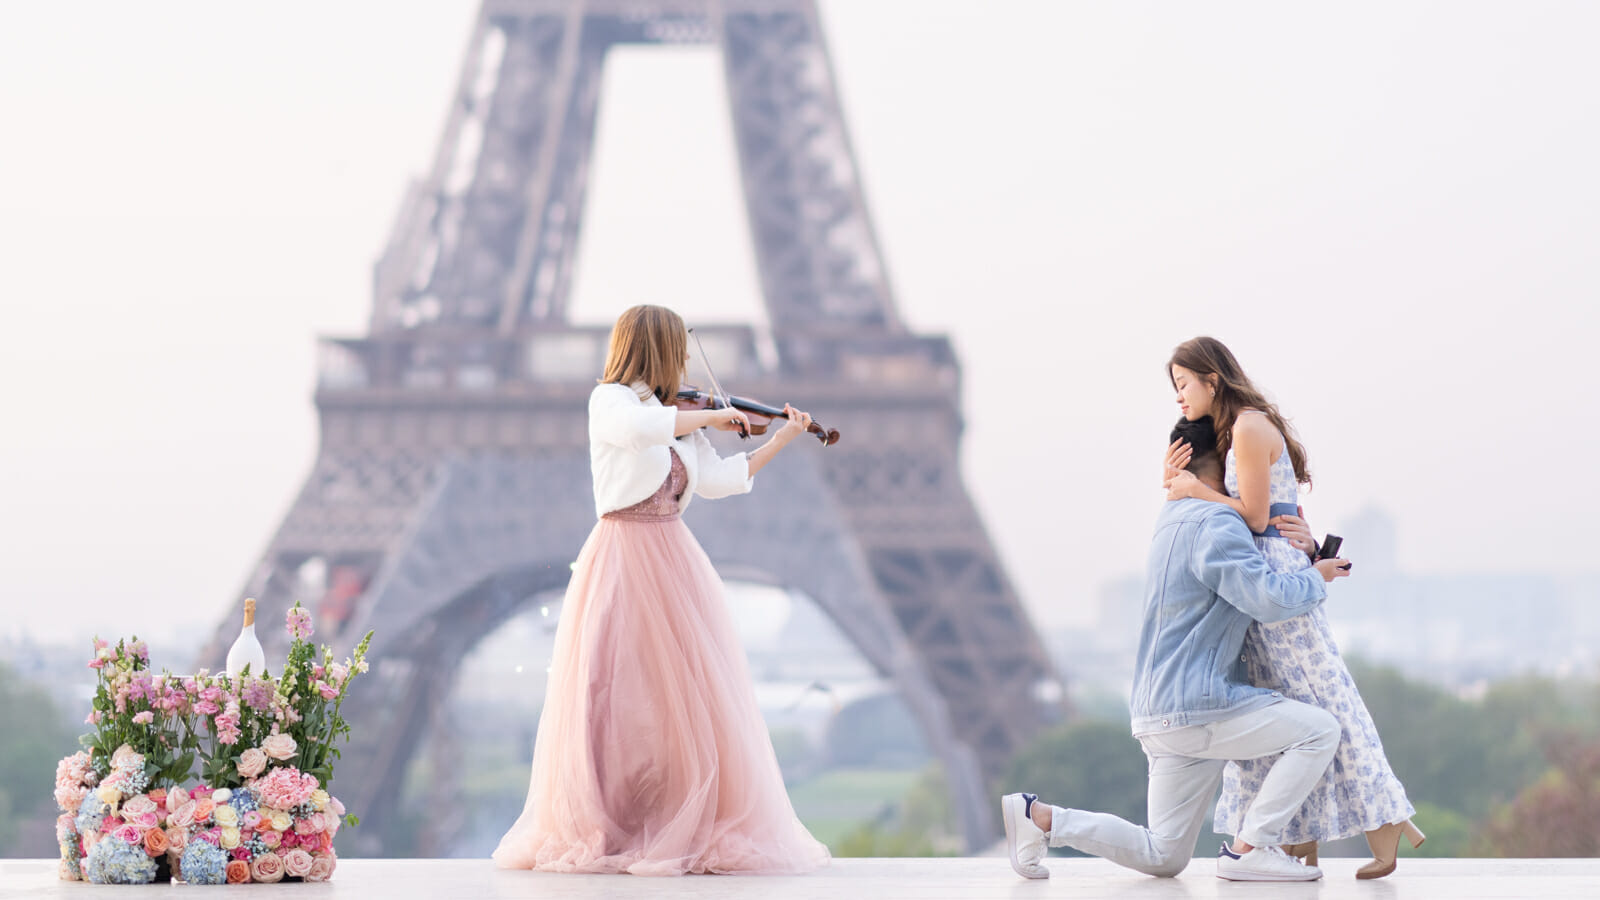 Musician Violinist proposal in Paris